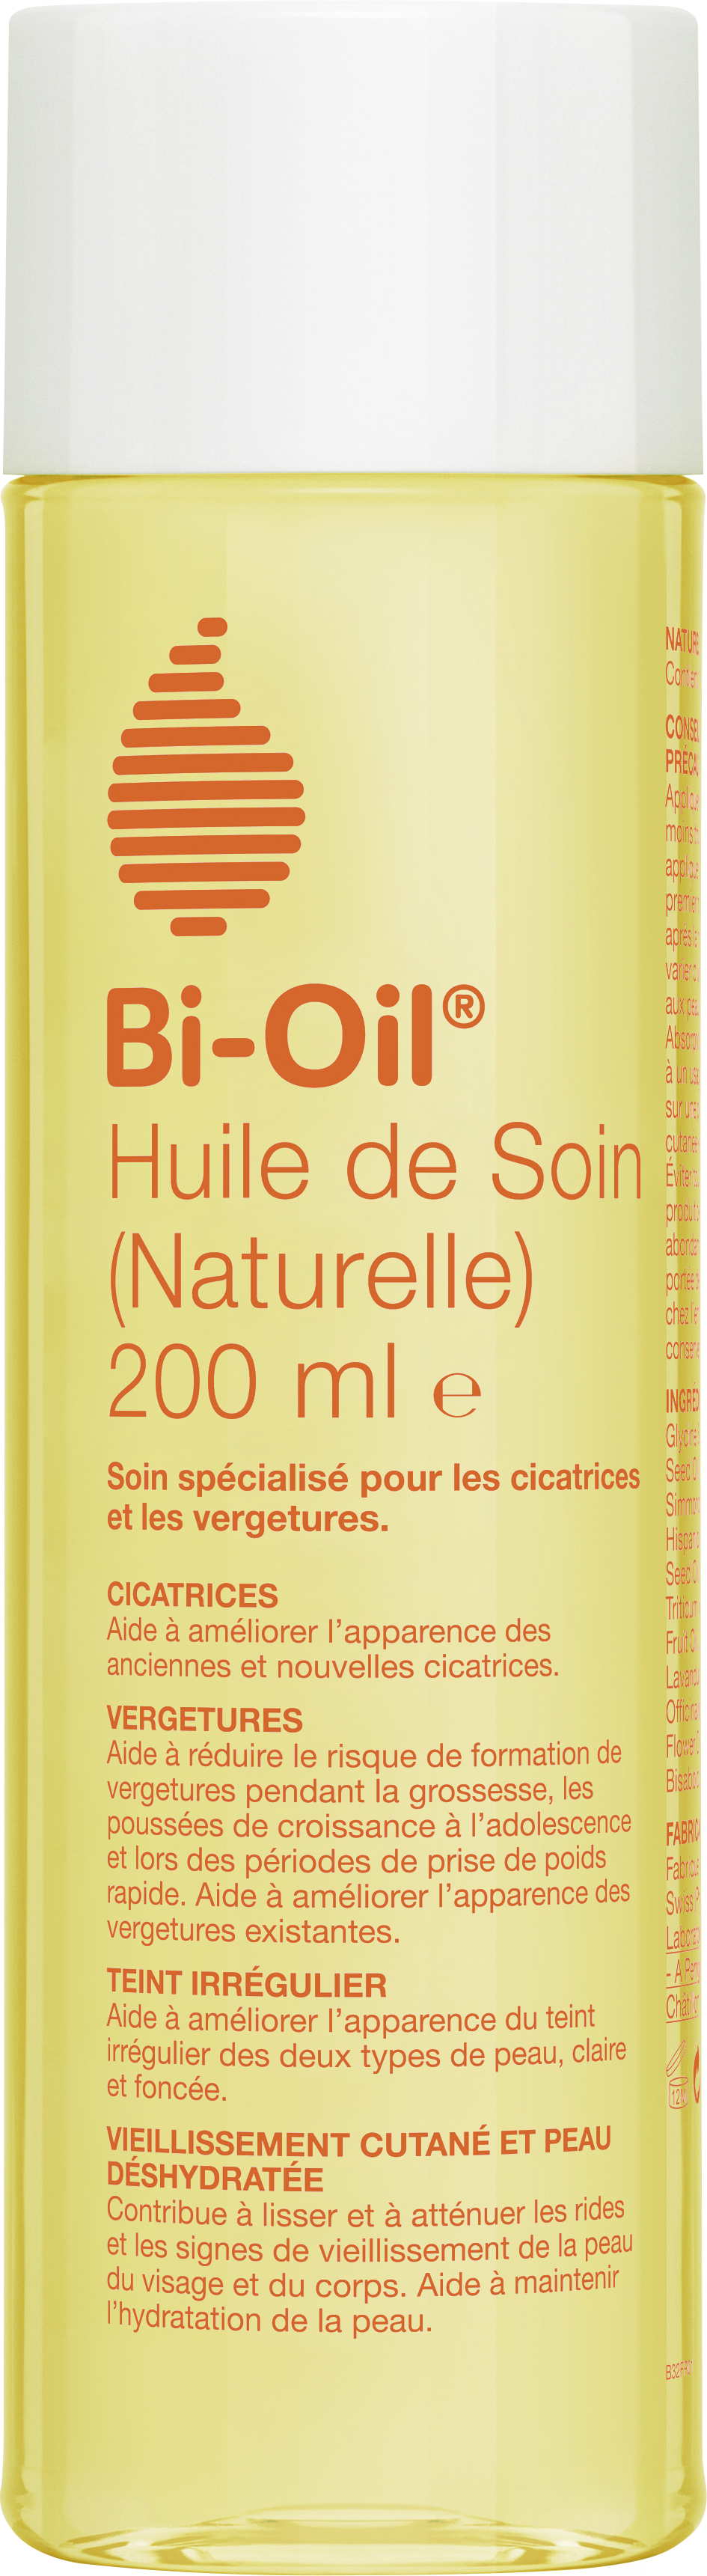 Bio oil Huile de soin naturelle 200ml